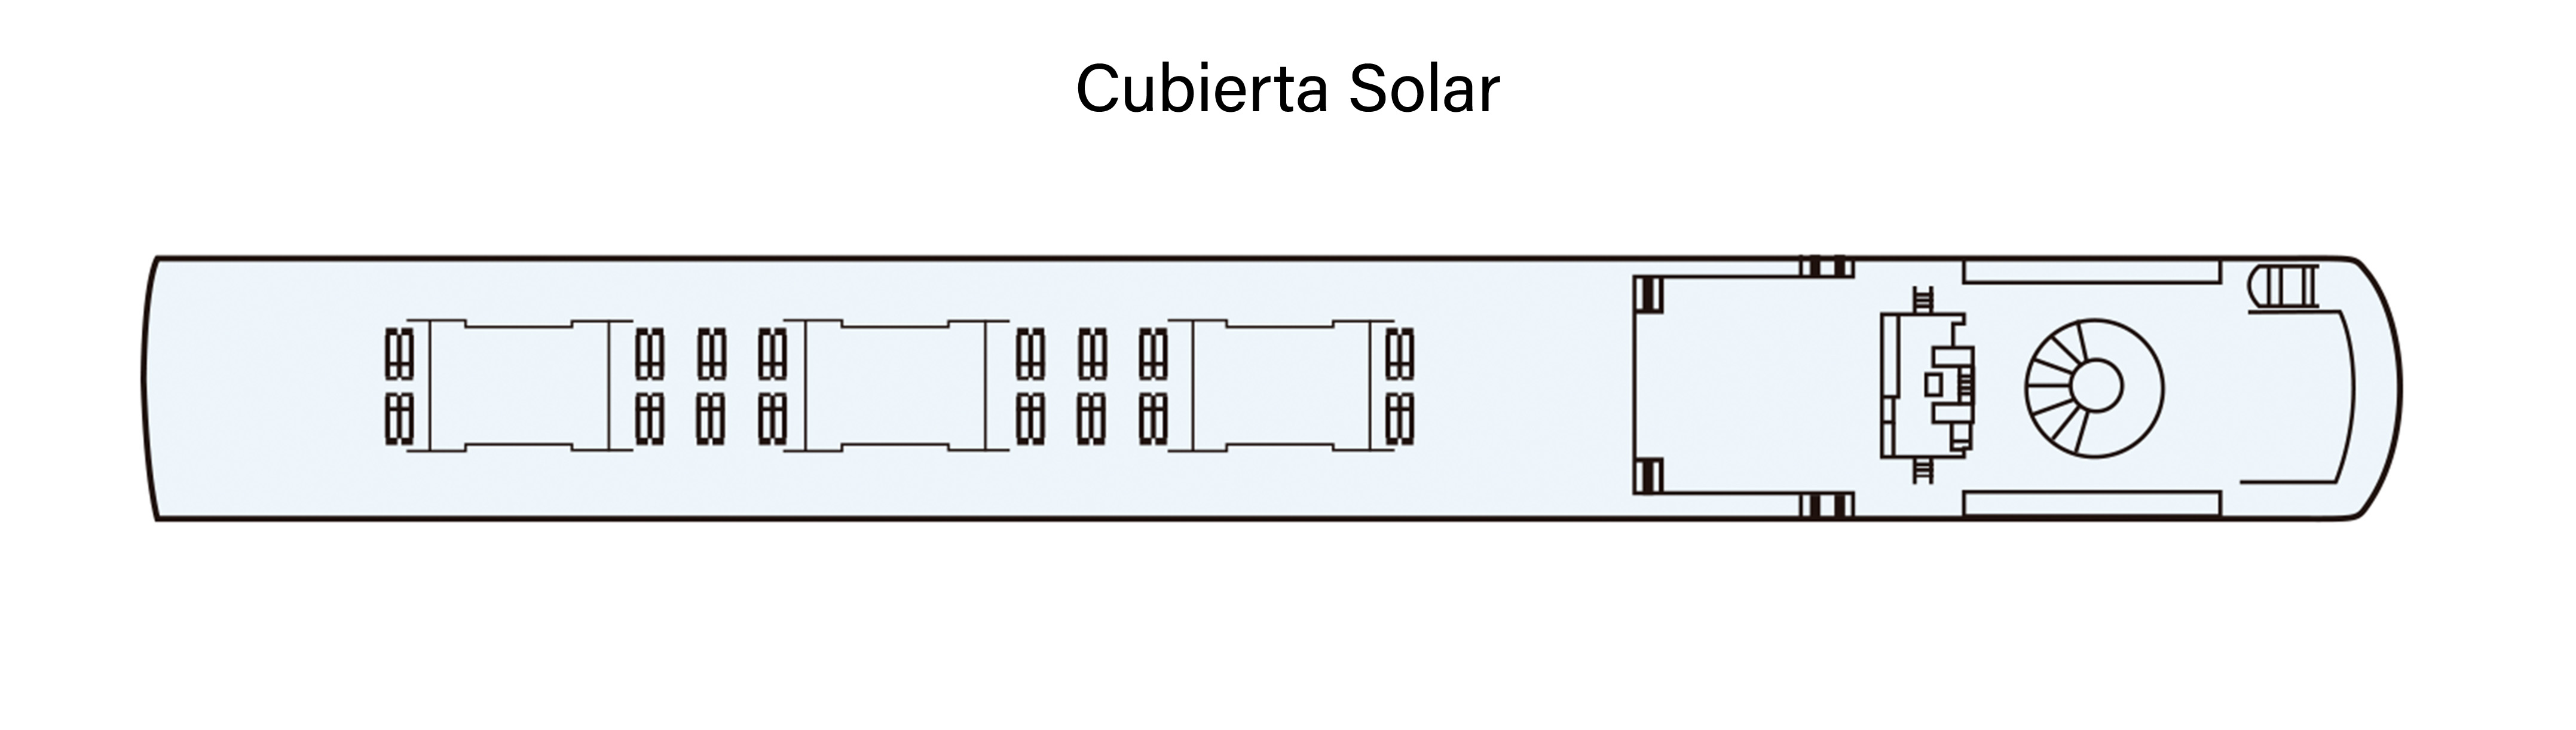 MS Leonora, Cubierta Solar